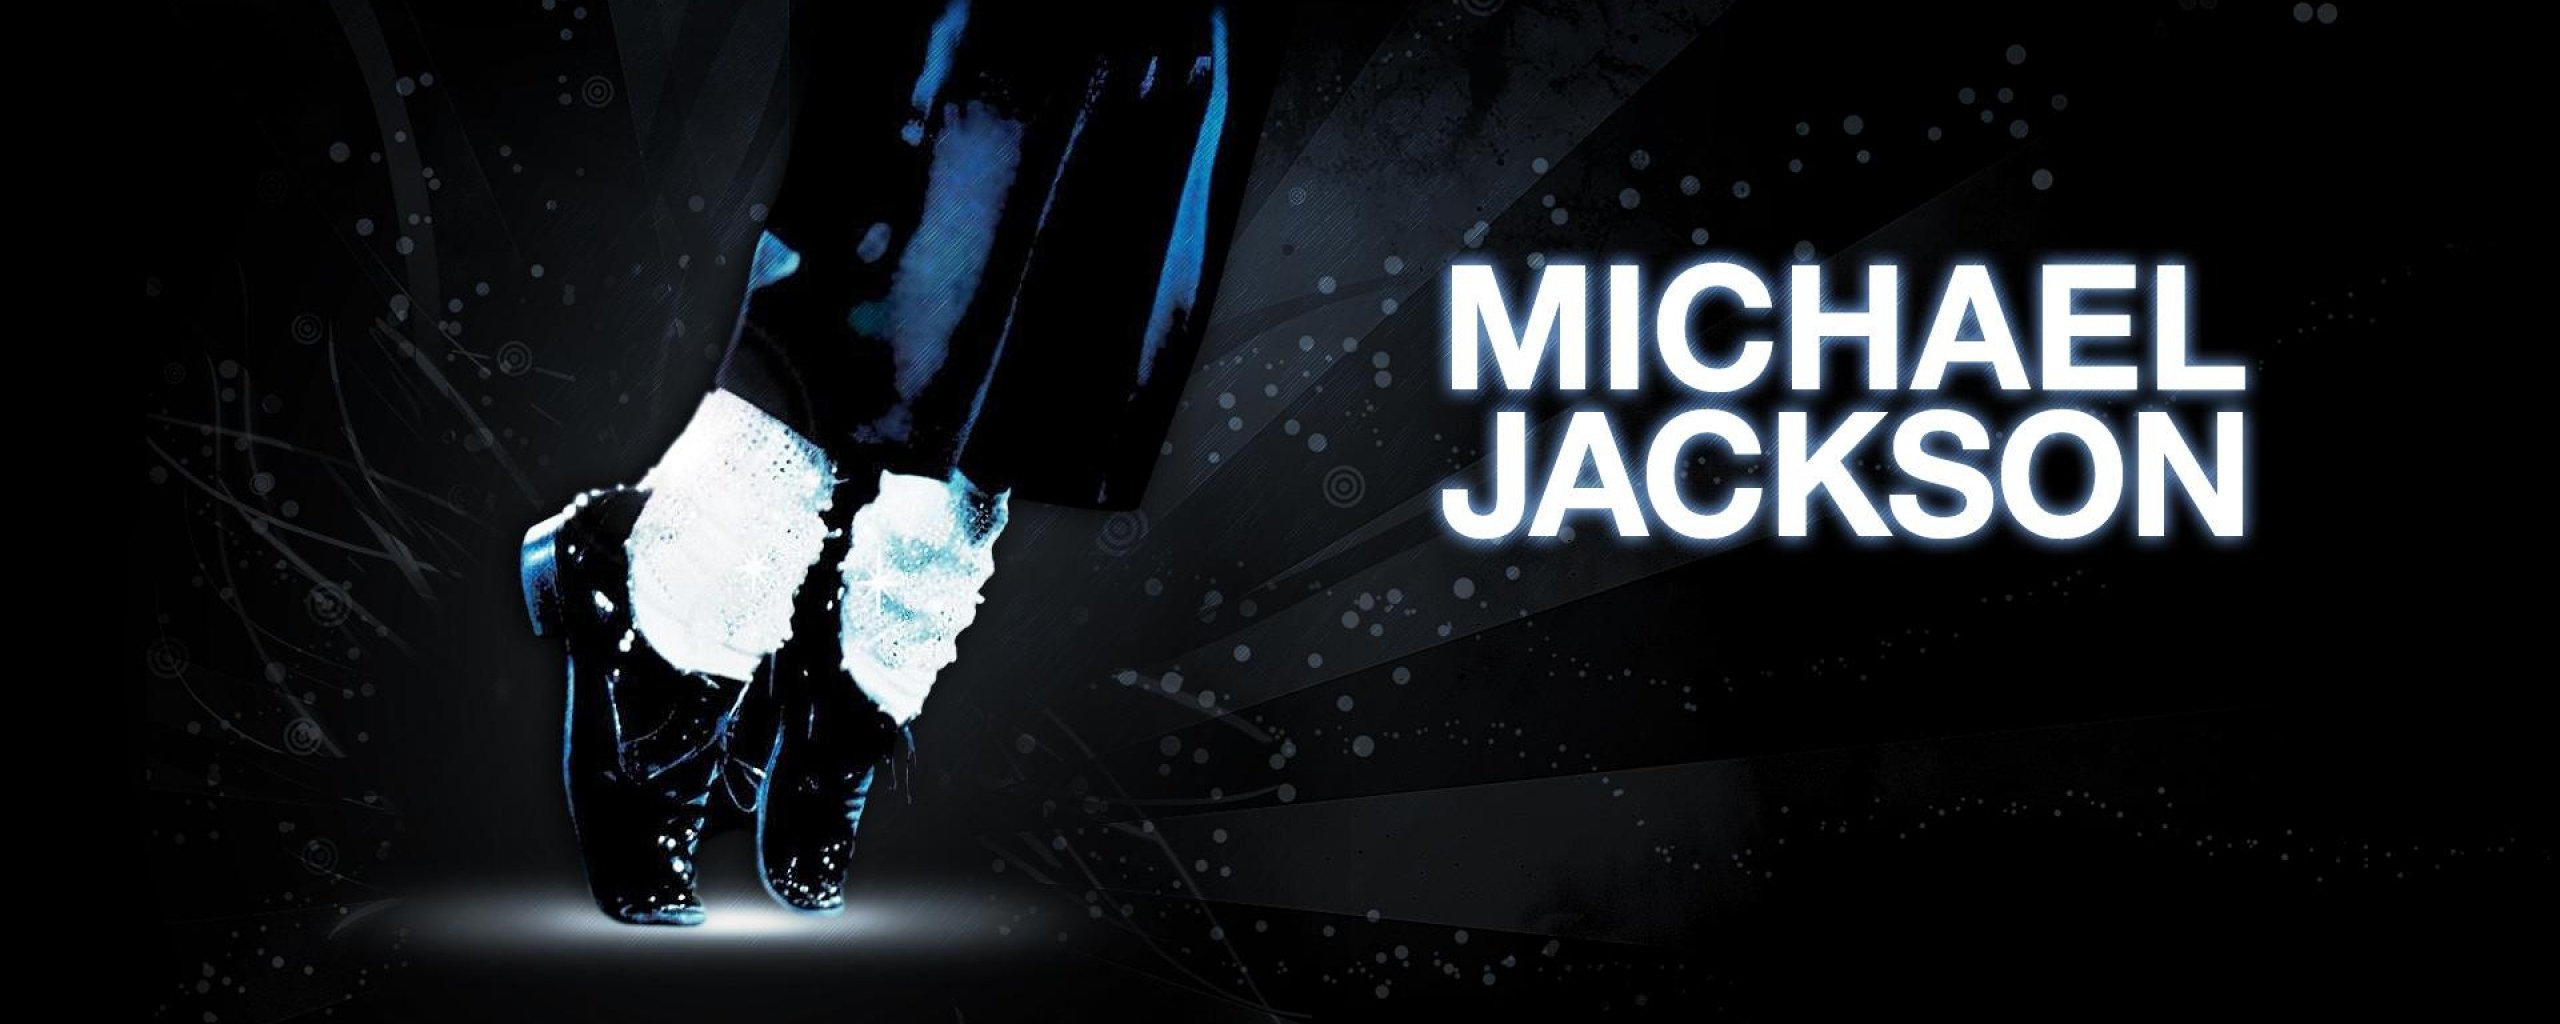 Michael Jackson Wallpapers HD shoes